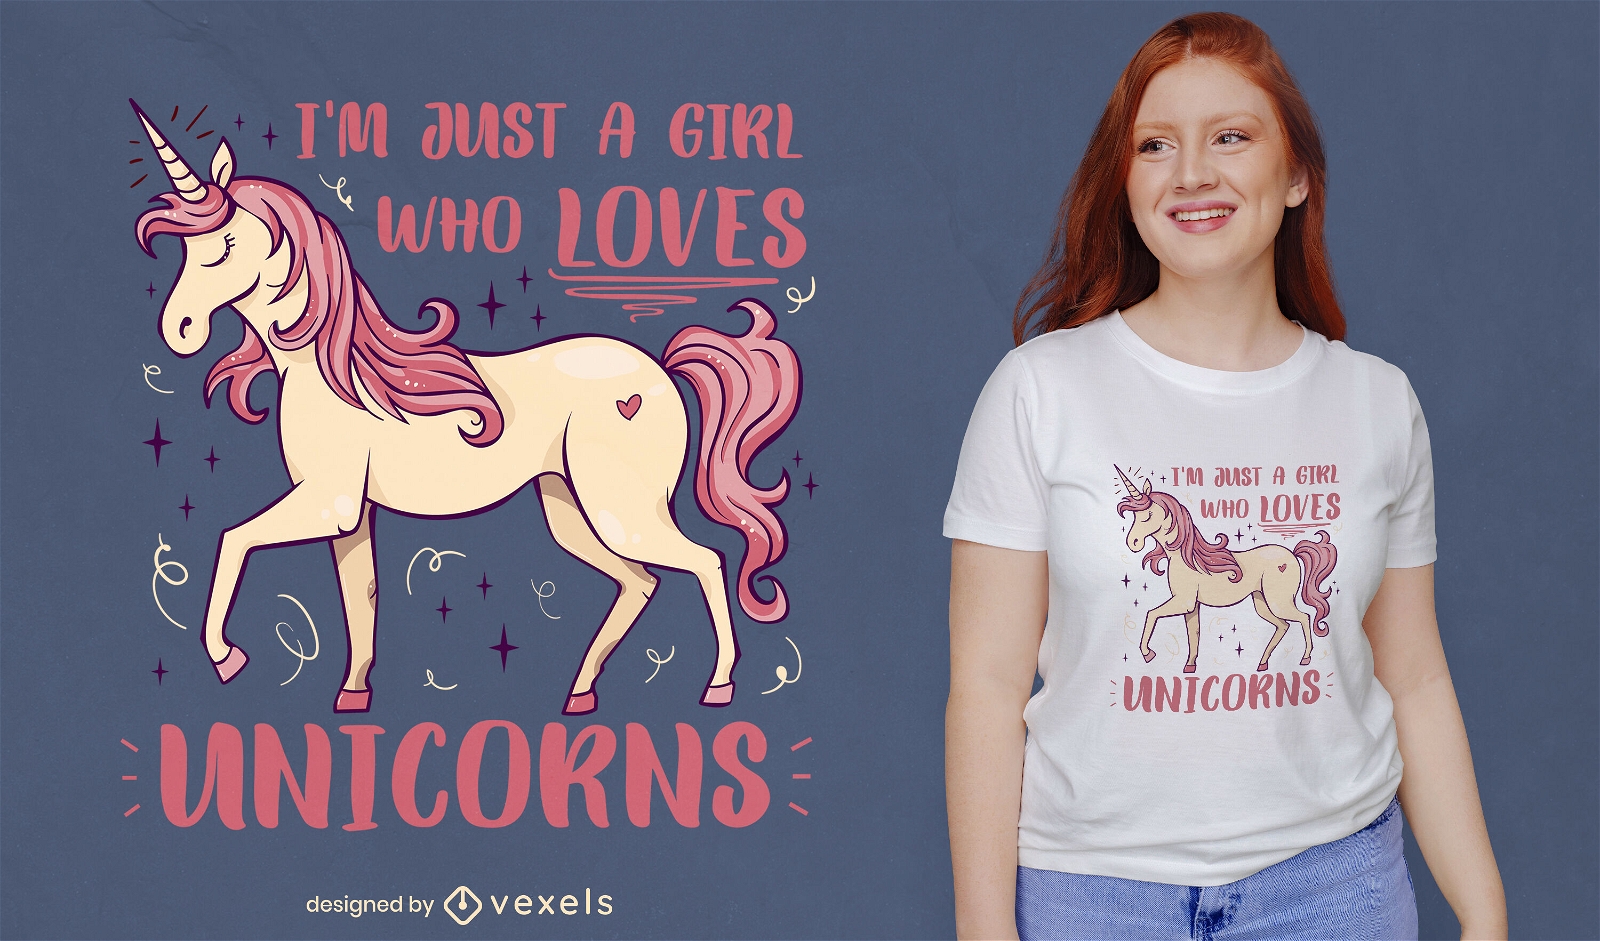 A girl who loves unicorns t-shirt design